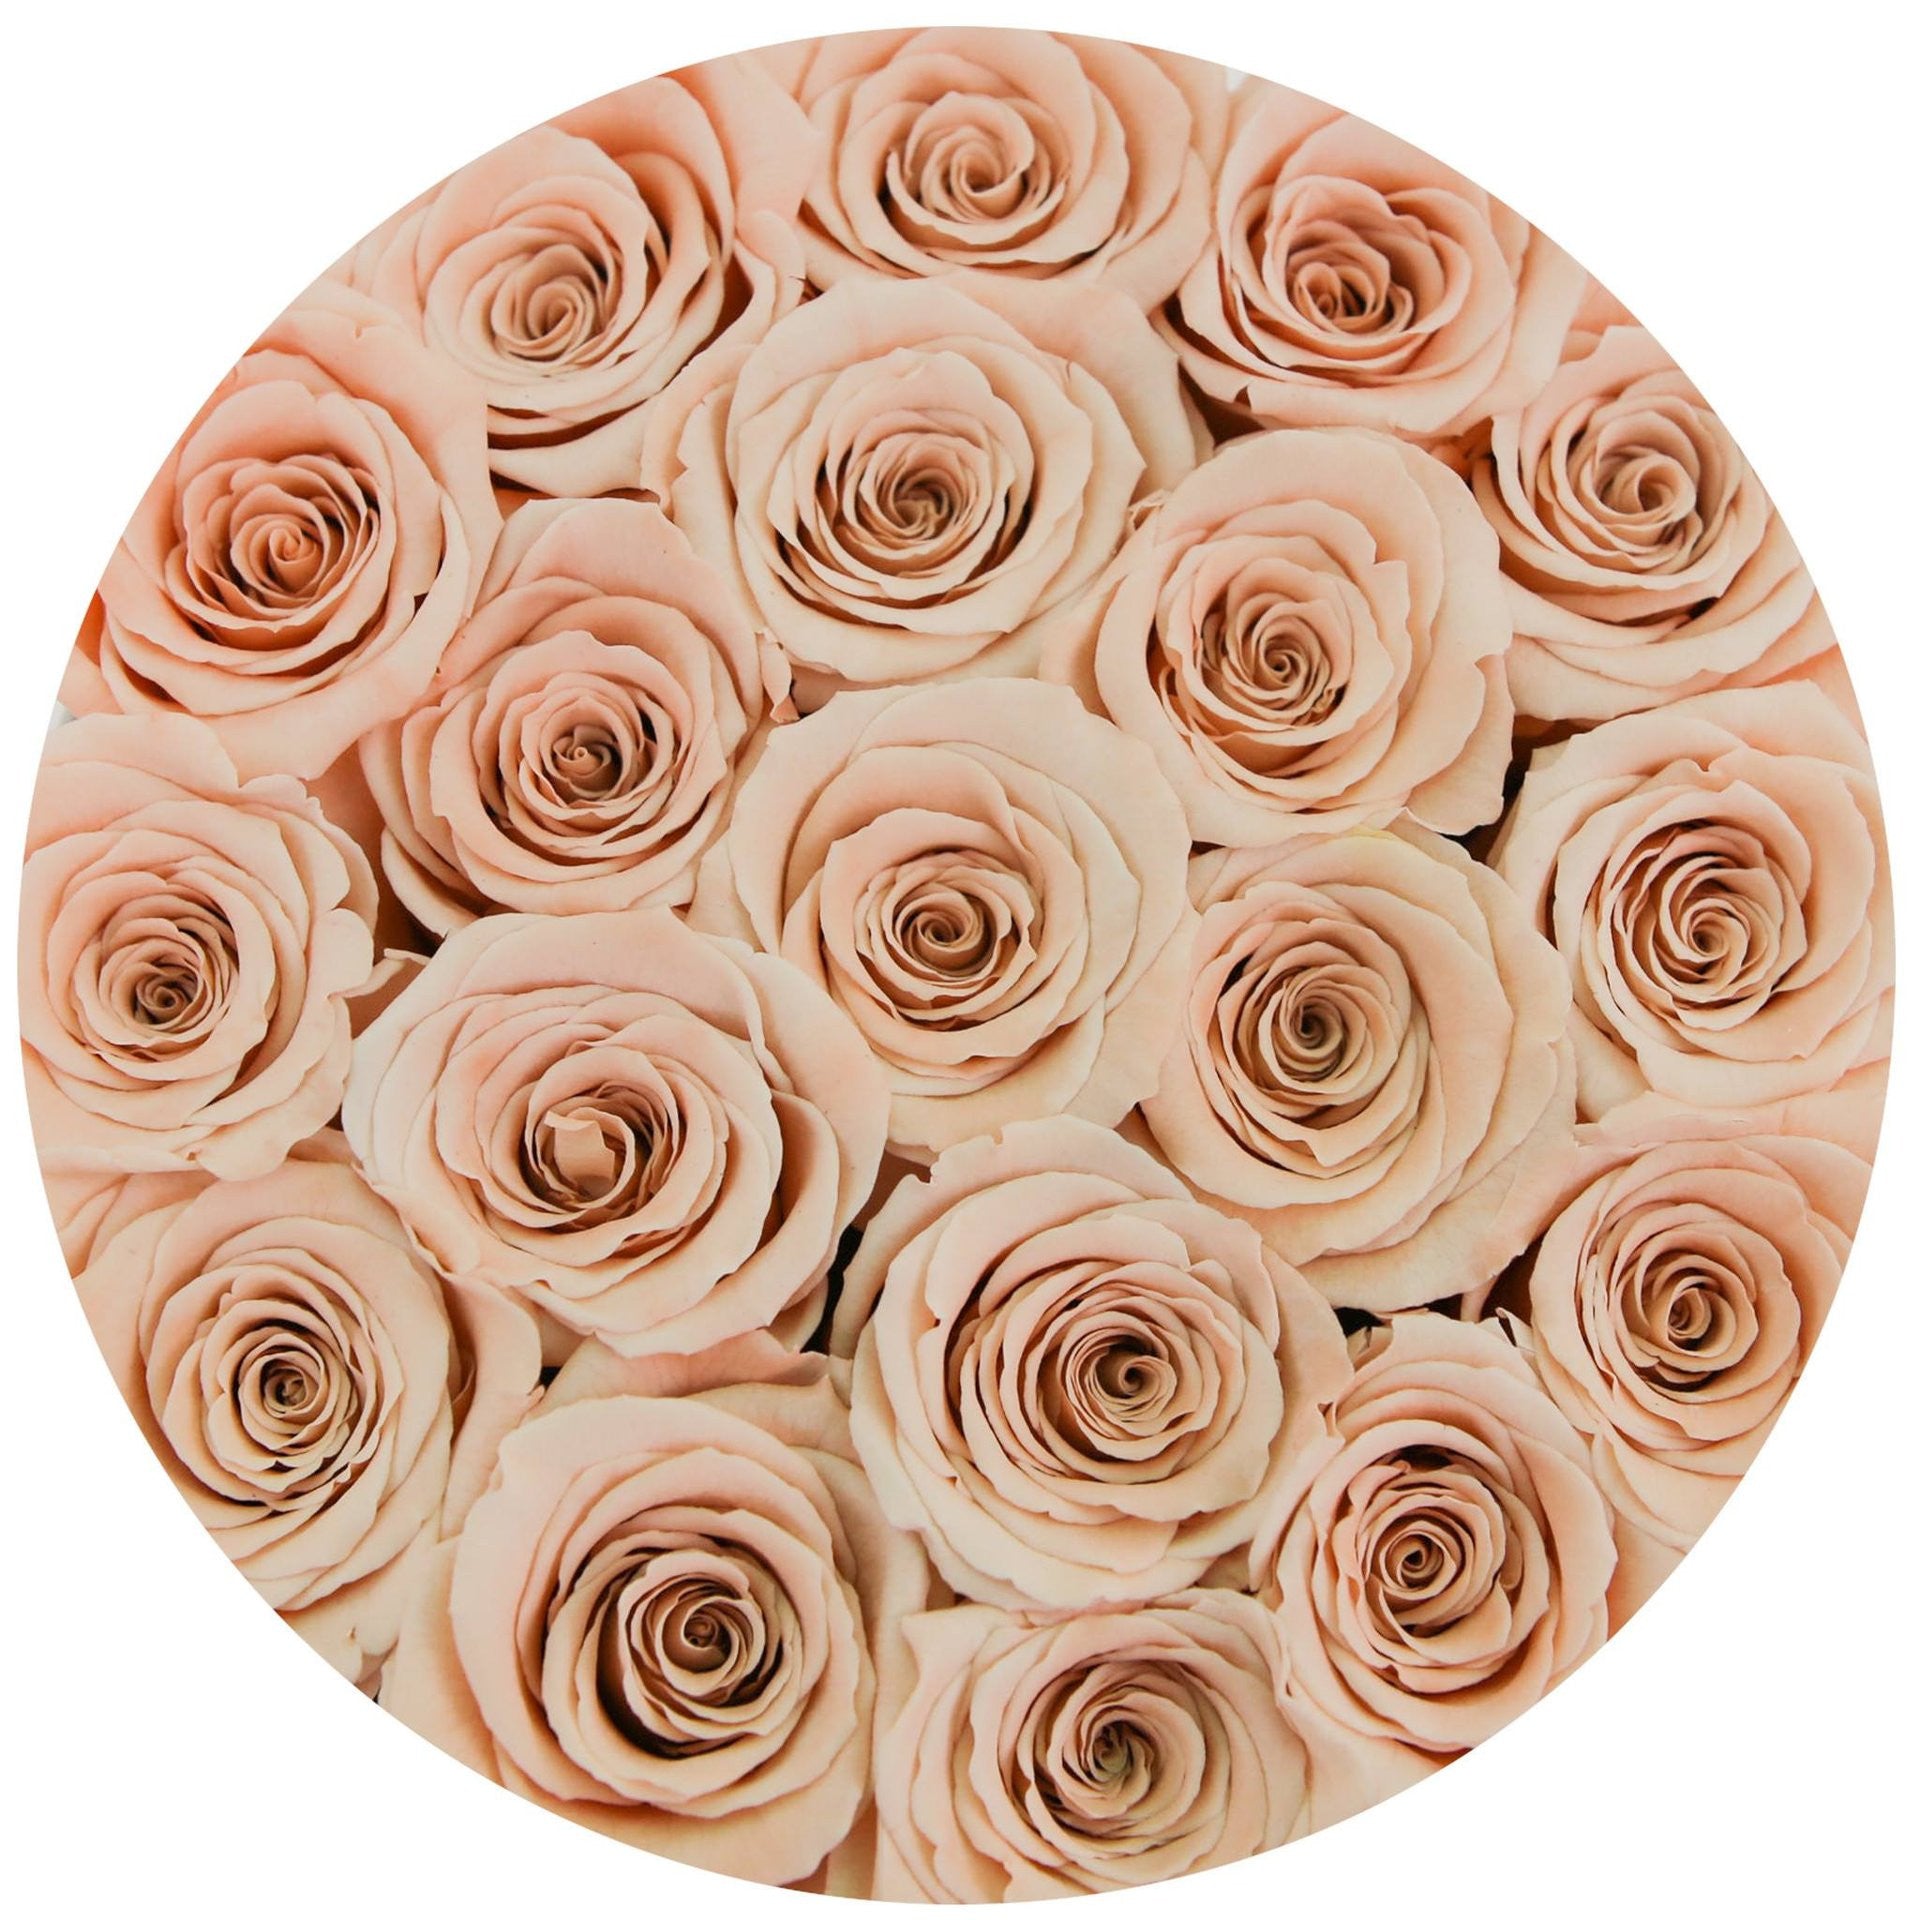 Aranjament cu trandafiri somon - Cutie mică